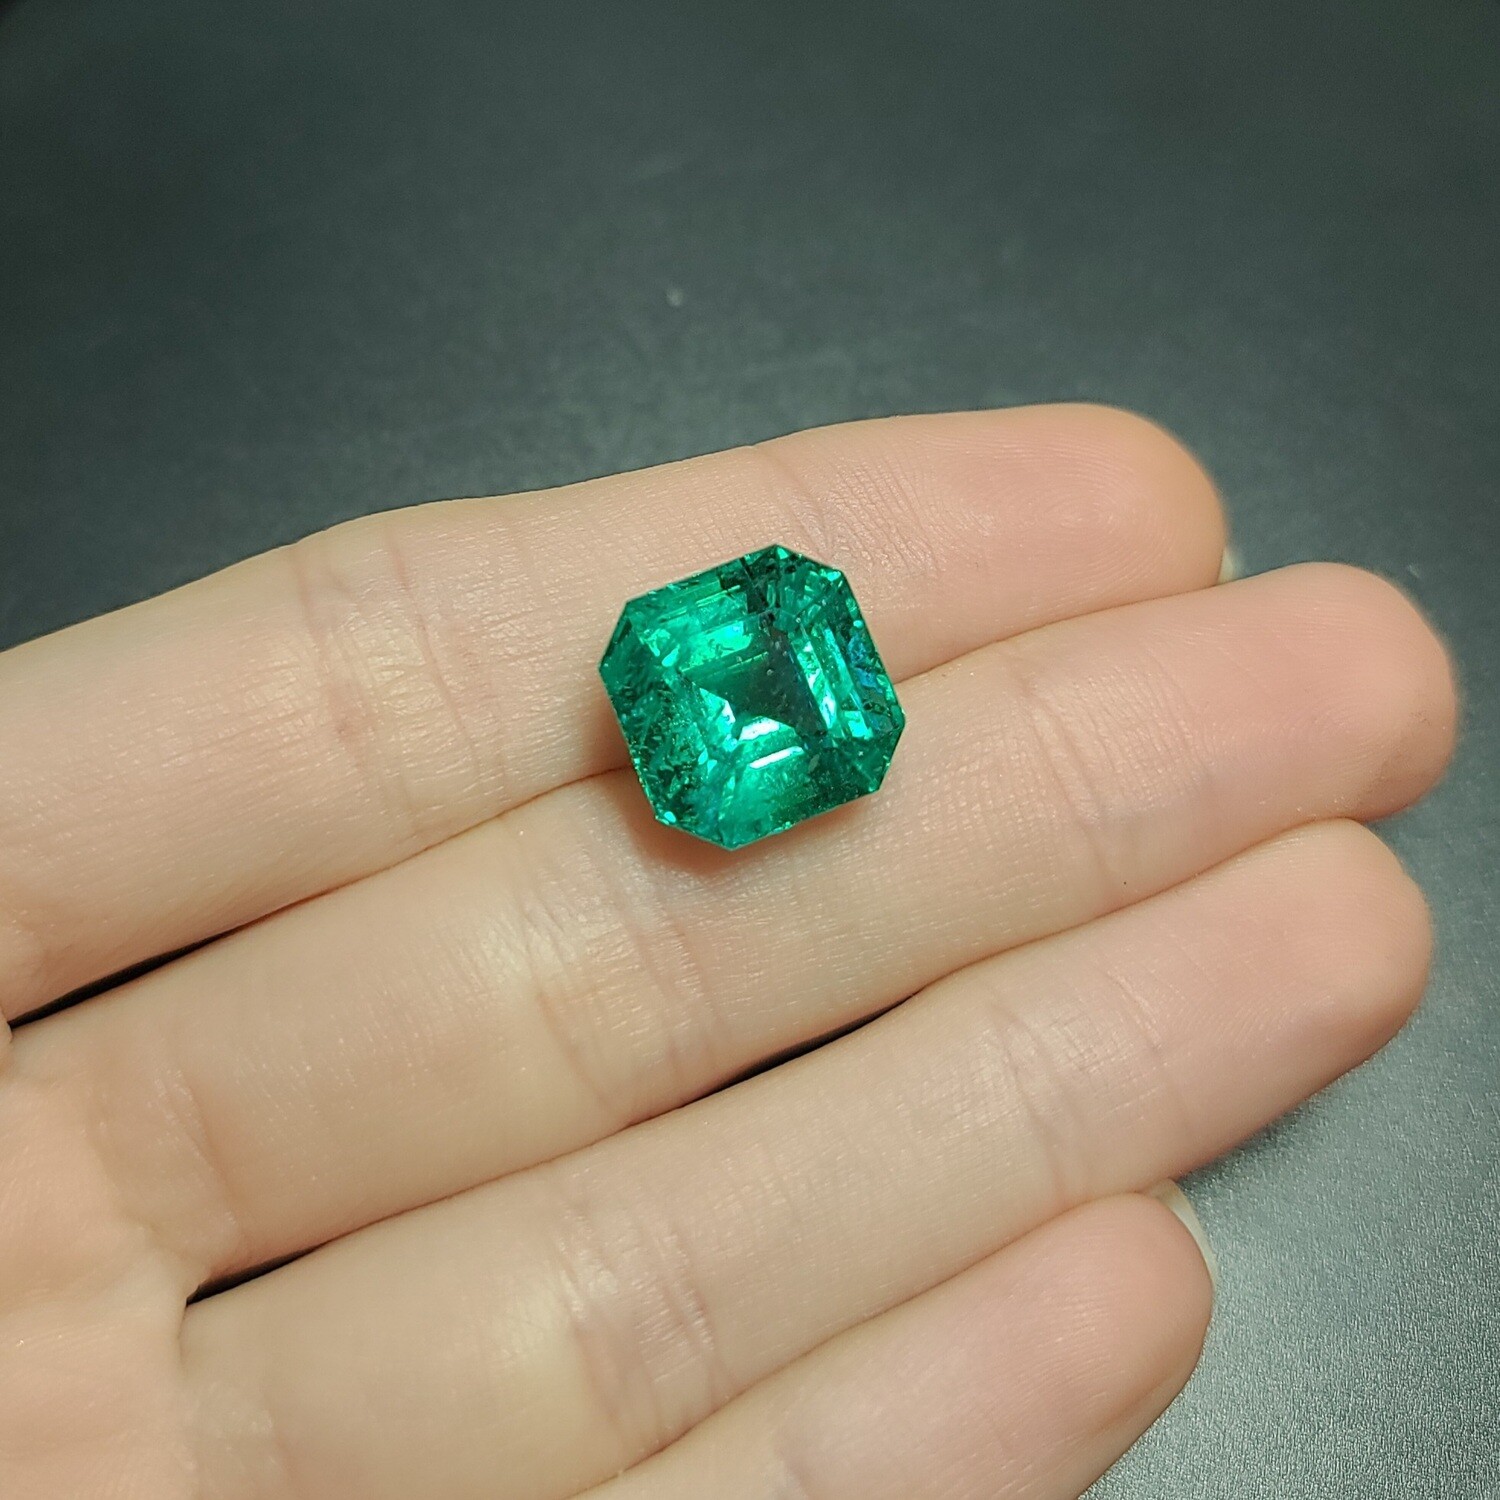 Sq.Emerald cut 10.66 ct